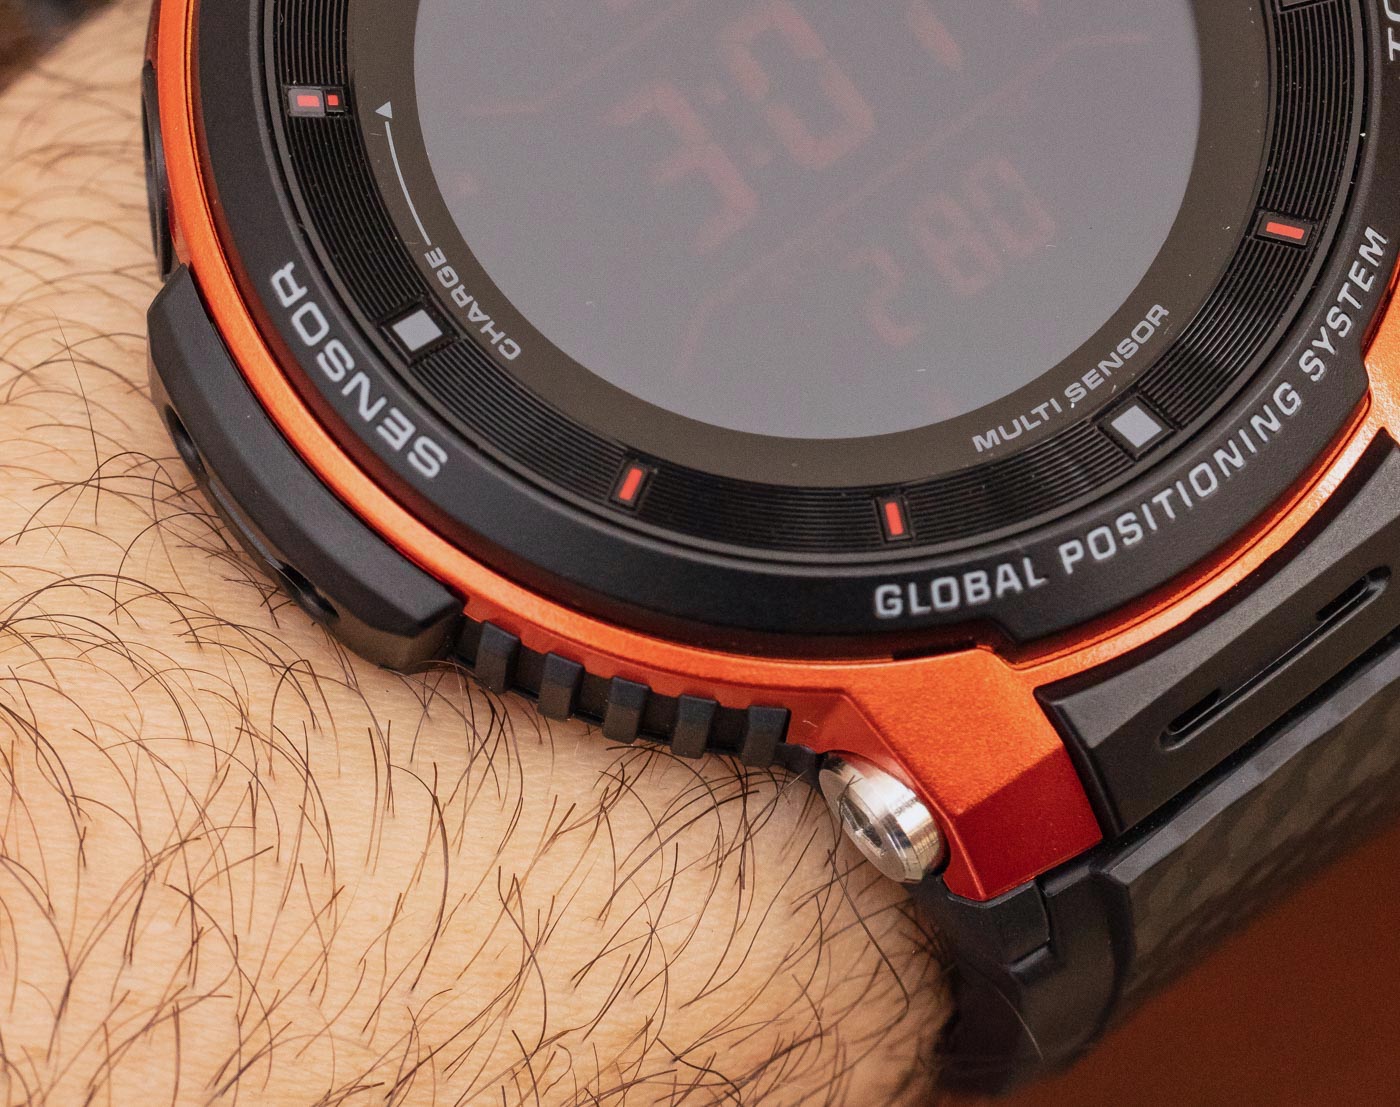 Casio Pro Trek Smart WSD-F30 Smartwatch Review | aBlogtoWatch